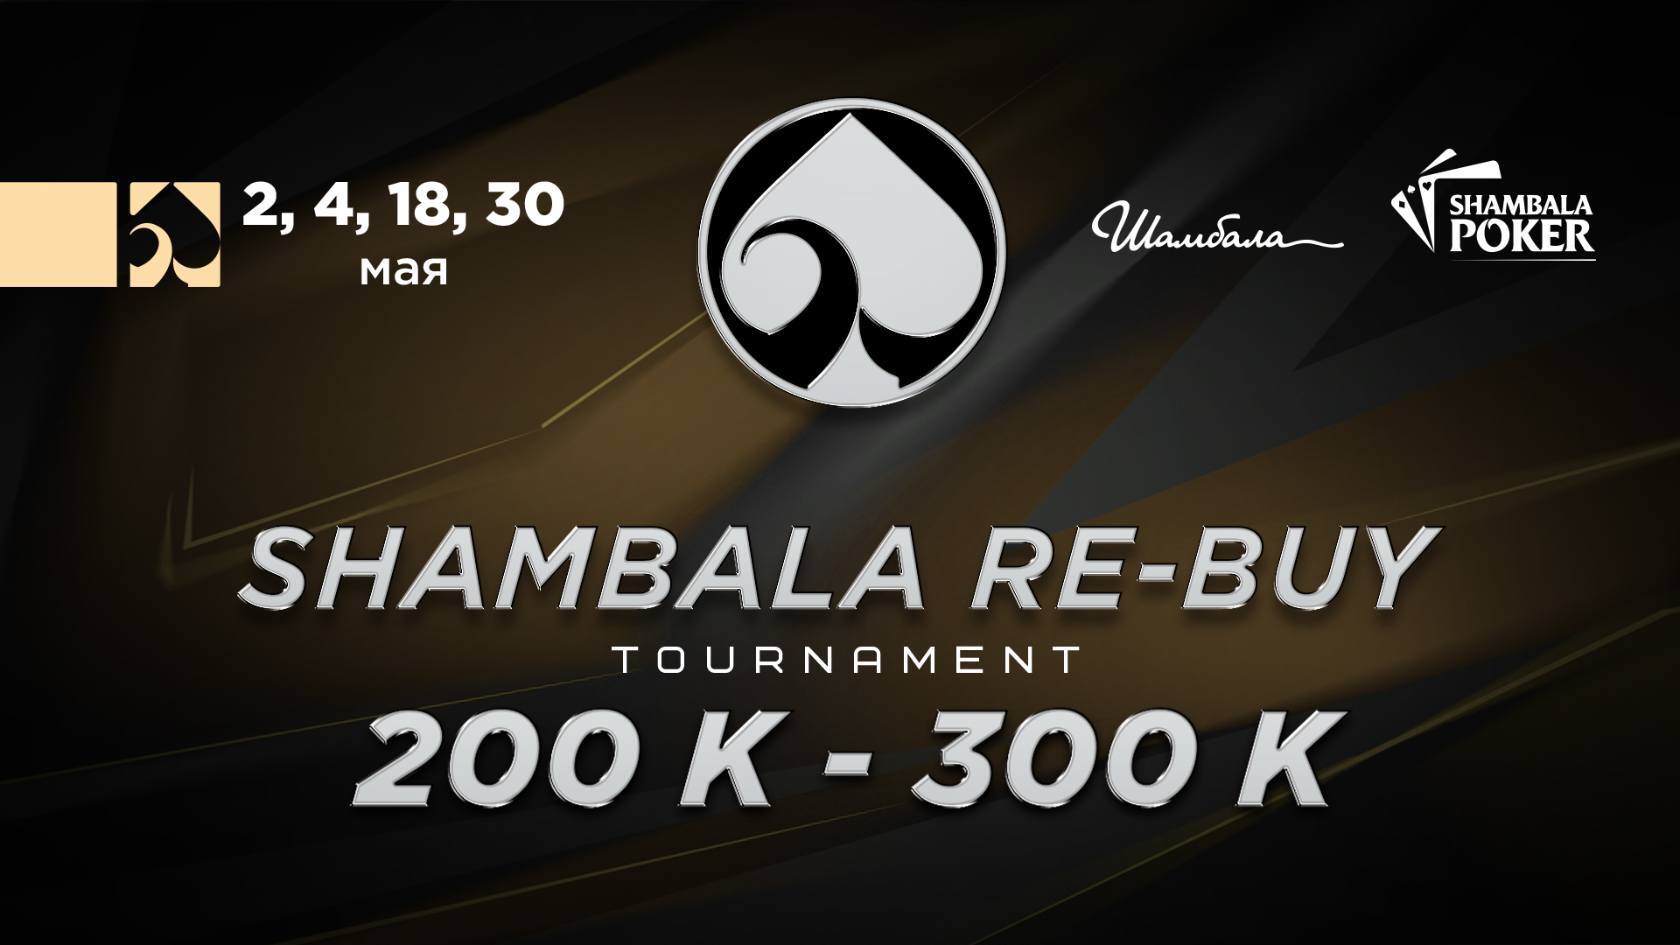 Shambala Re-Buy